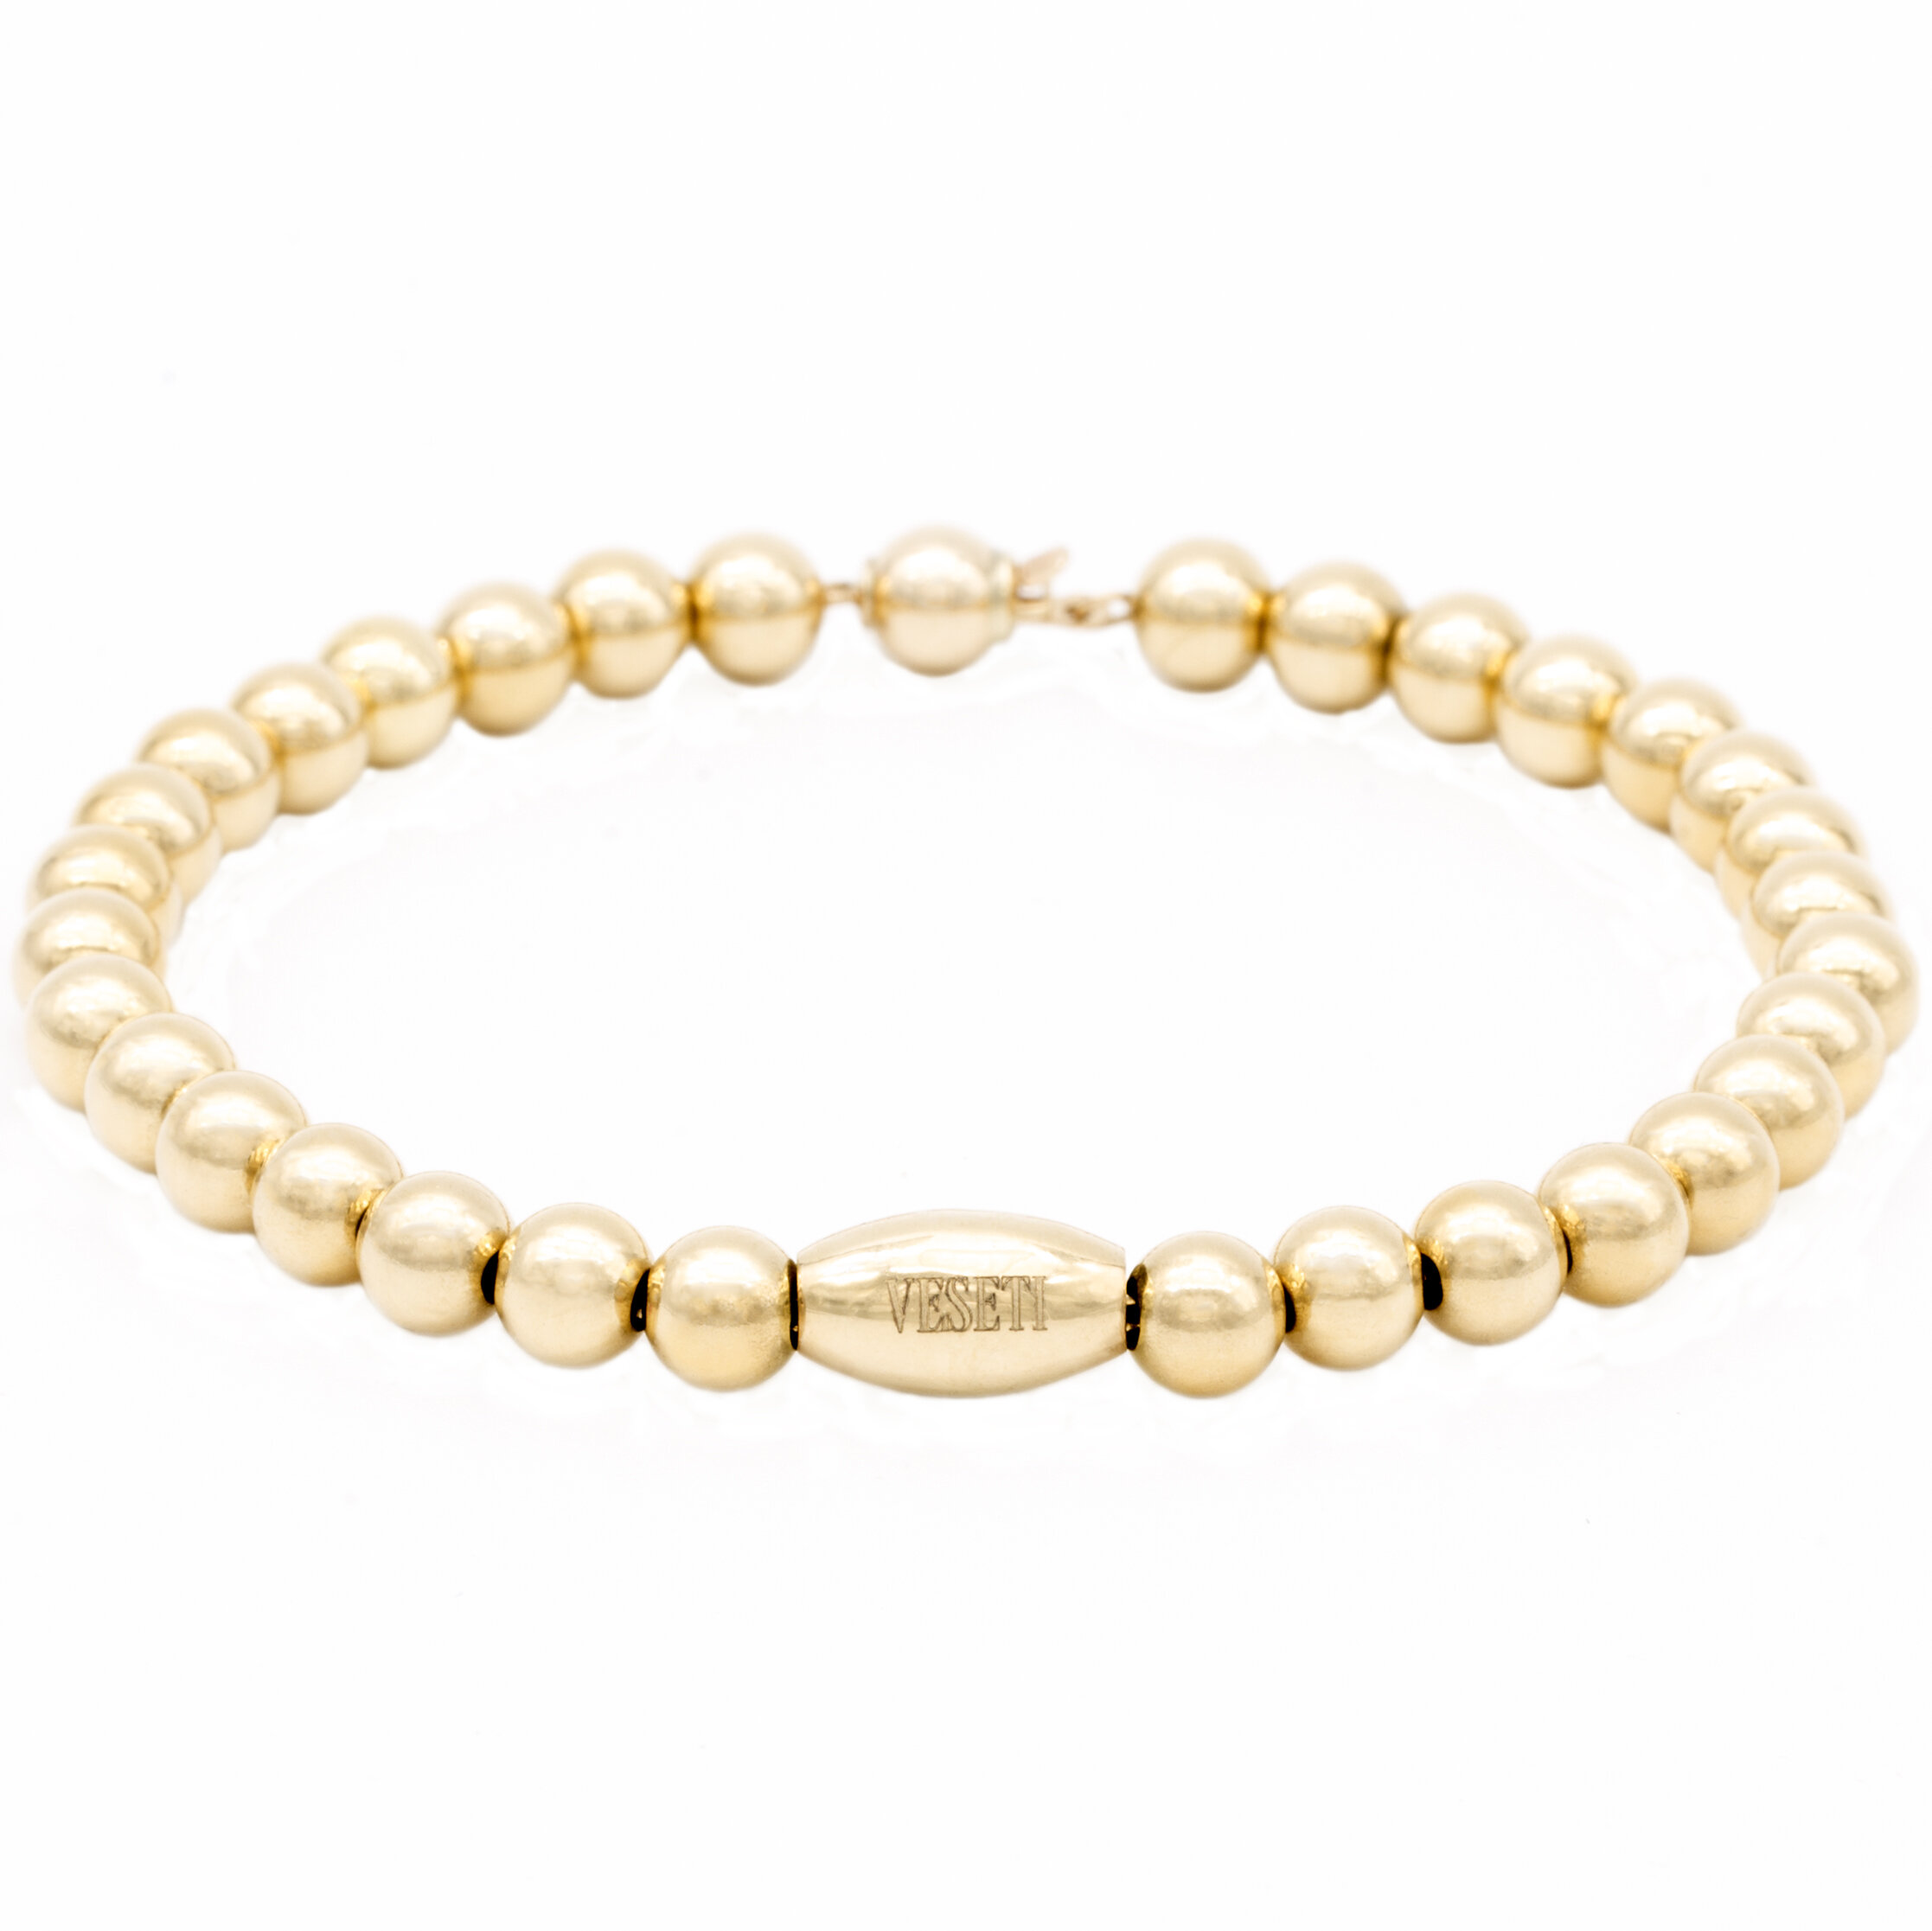 Details more than 74 tiffany gold bead bracelet best - 3tdesign.edu.vn